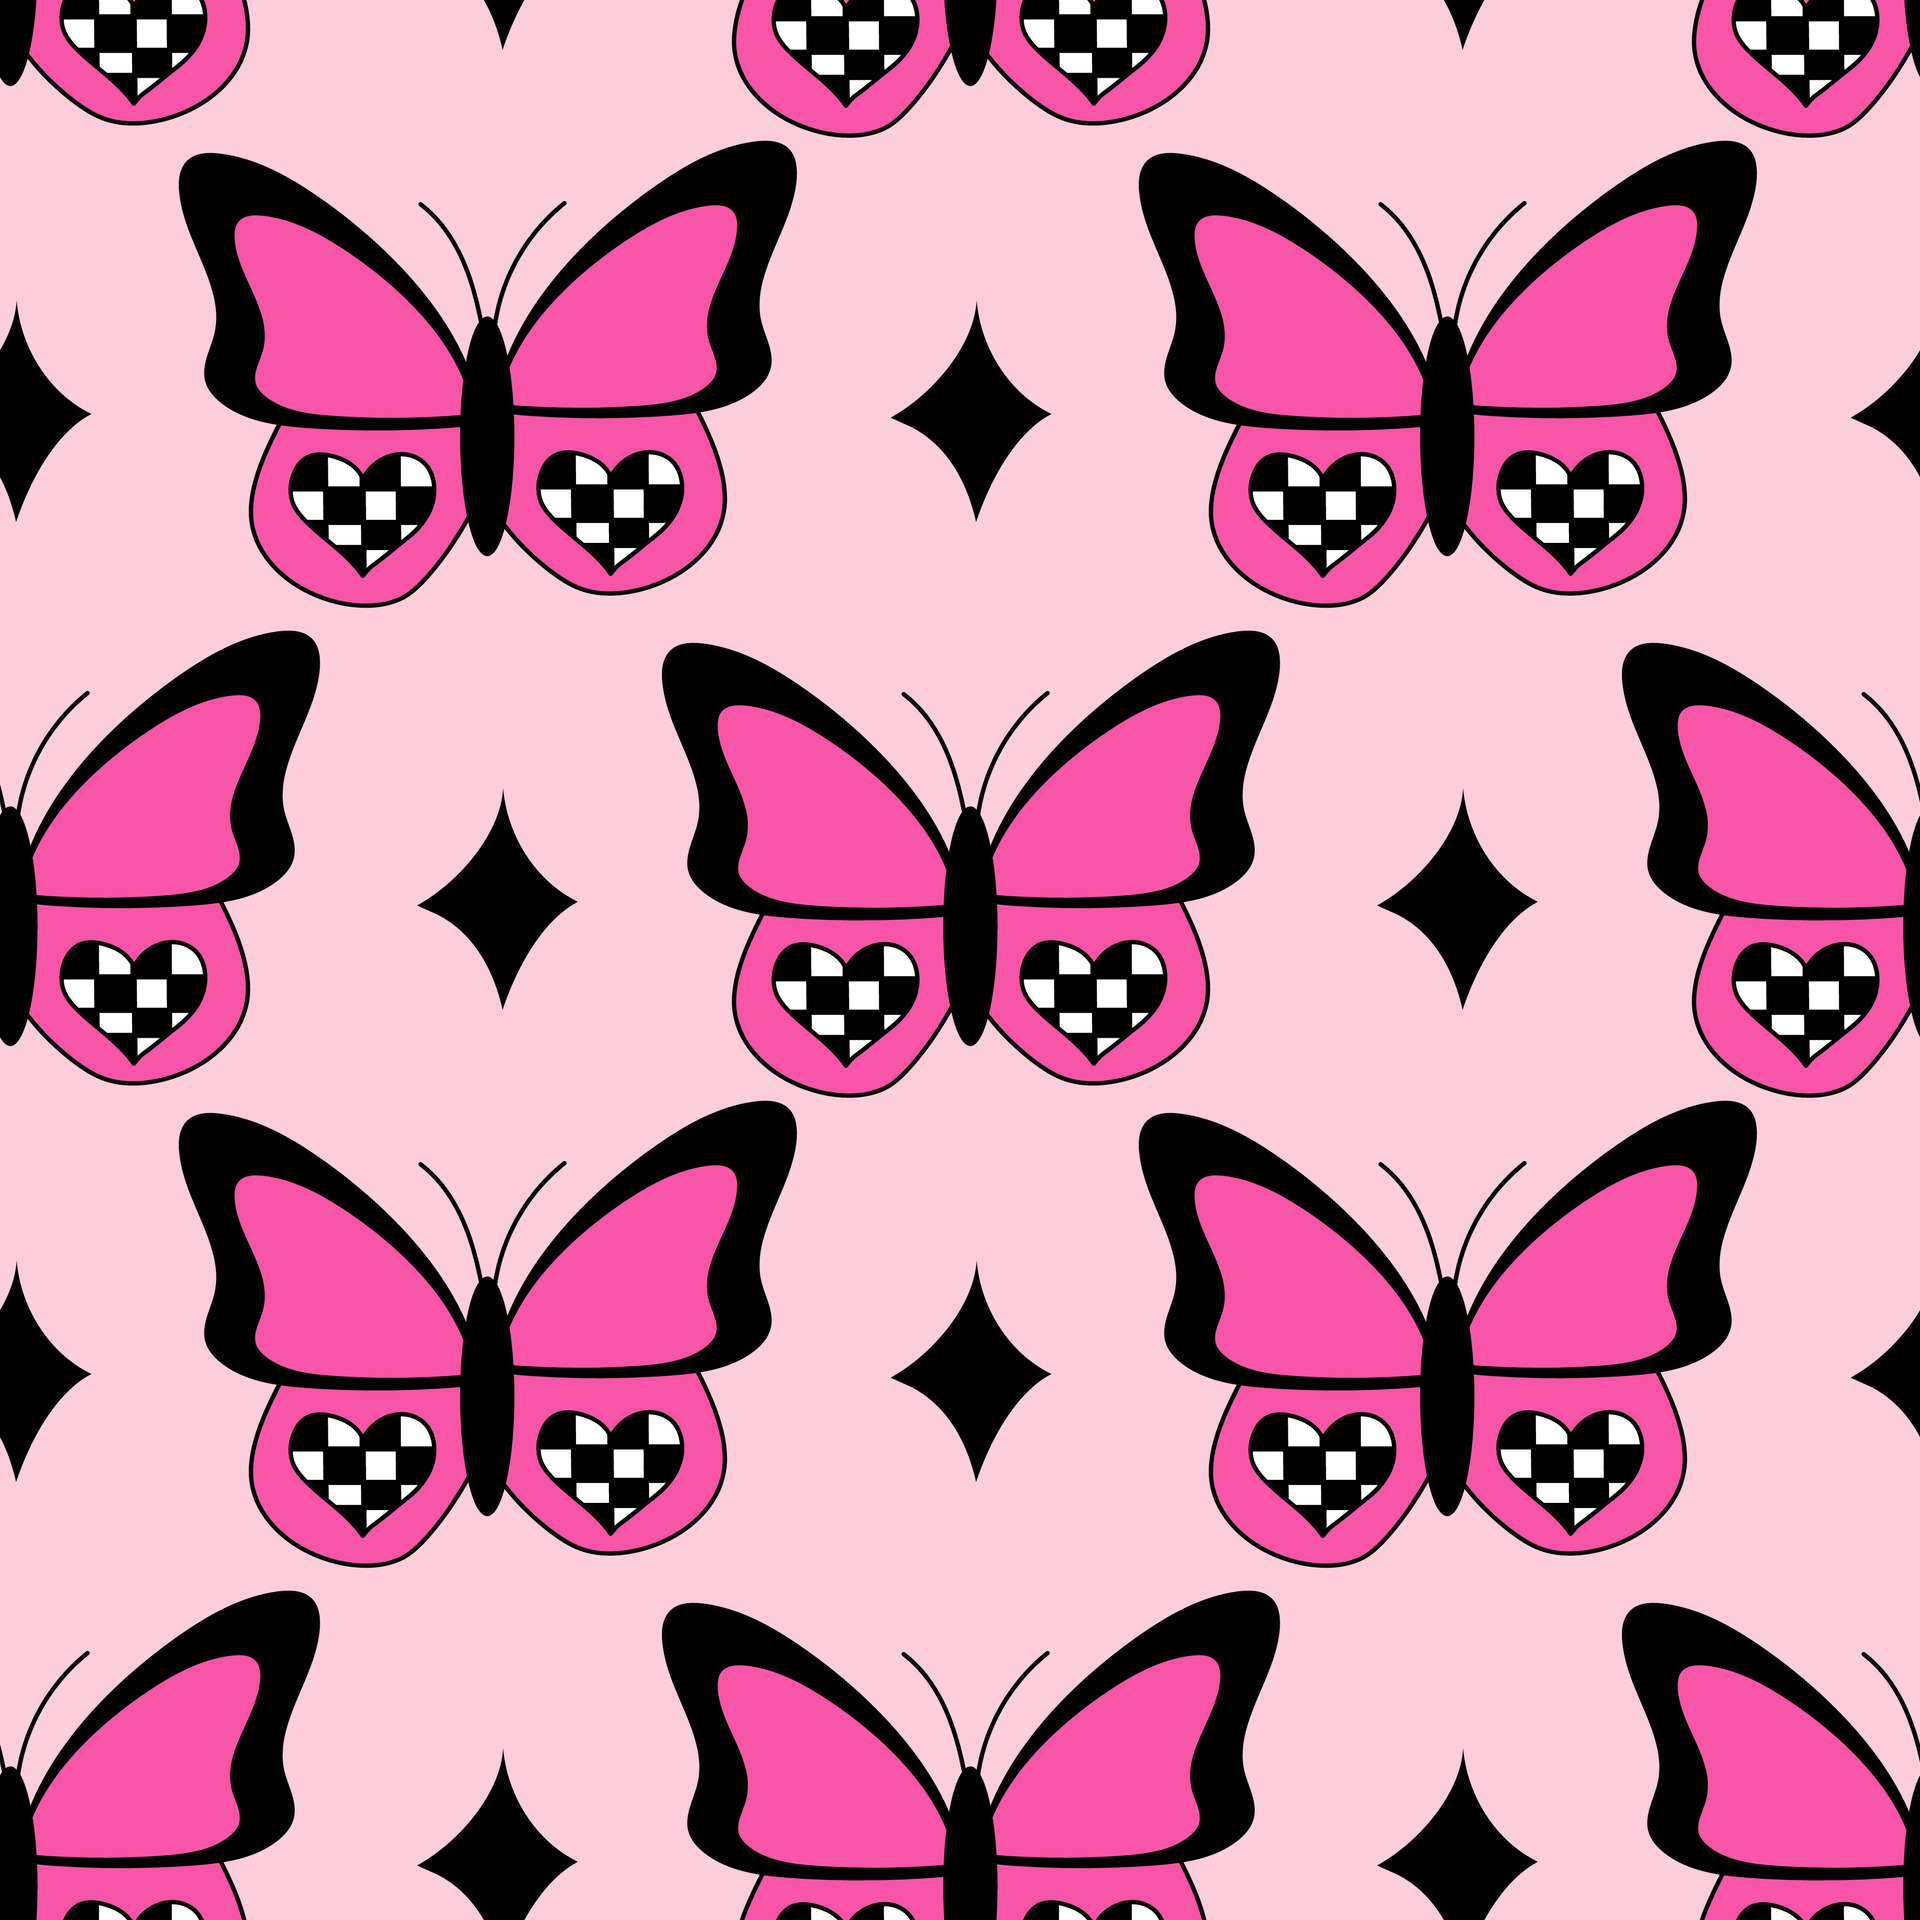 Emo boy stock vector. Illustration of butterfly, punk - 4942865